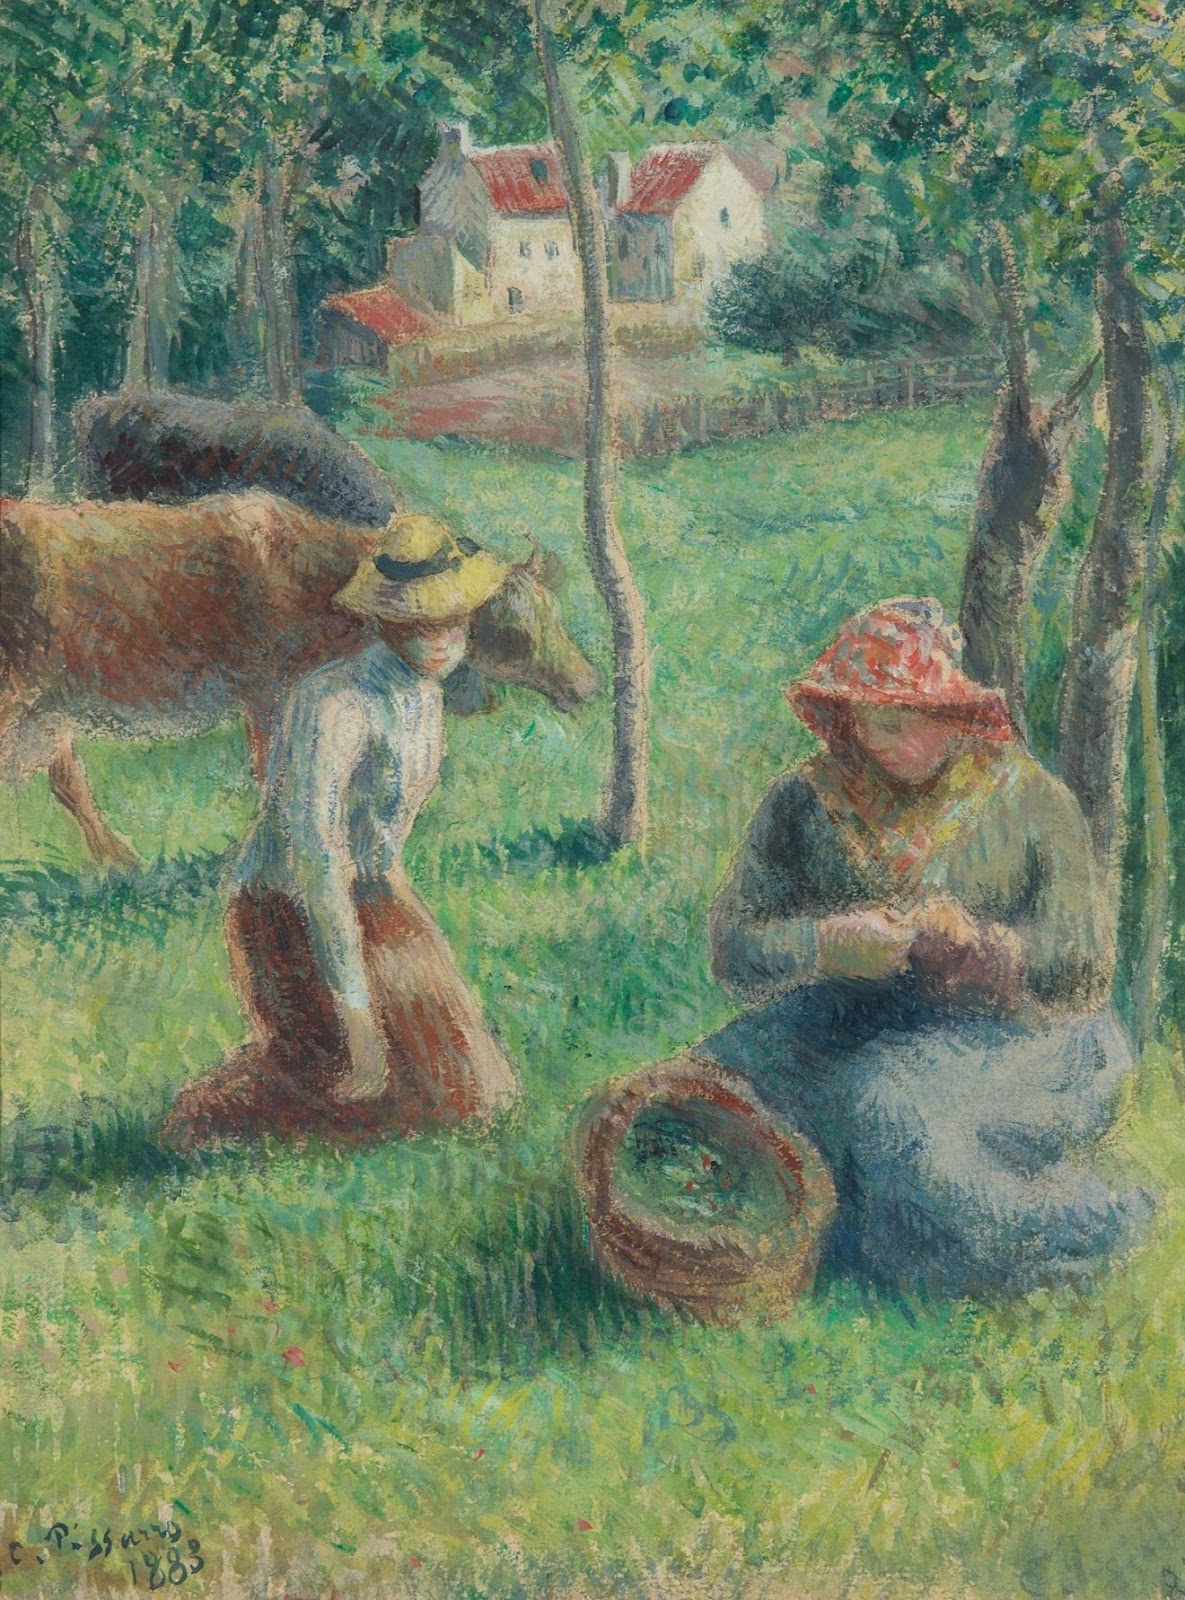 Camille+Pissarro-1830-1903 (212).jpg